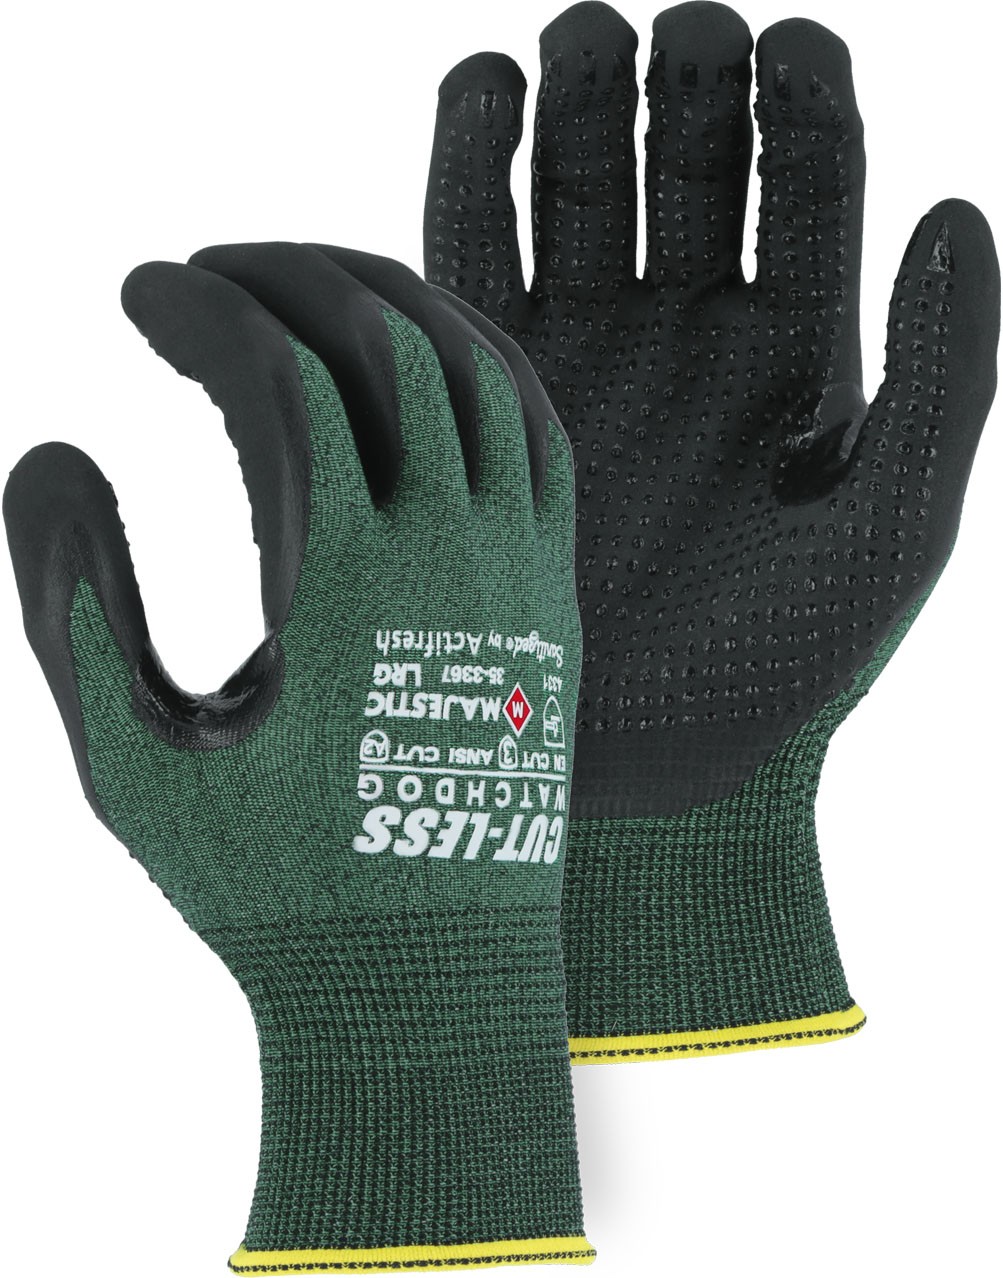 35-3367 Majestic® Cut-Less Watchdog® Glove w Micro Foam Dotted Palm